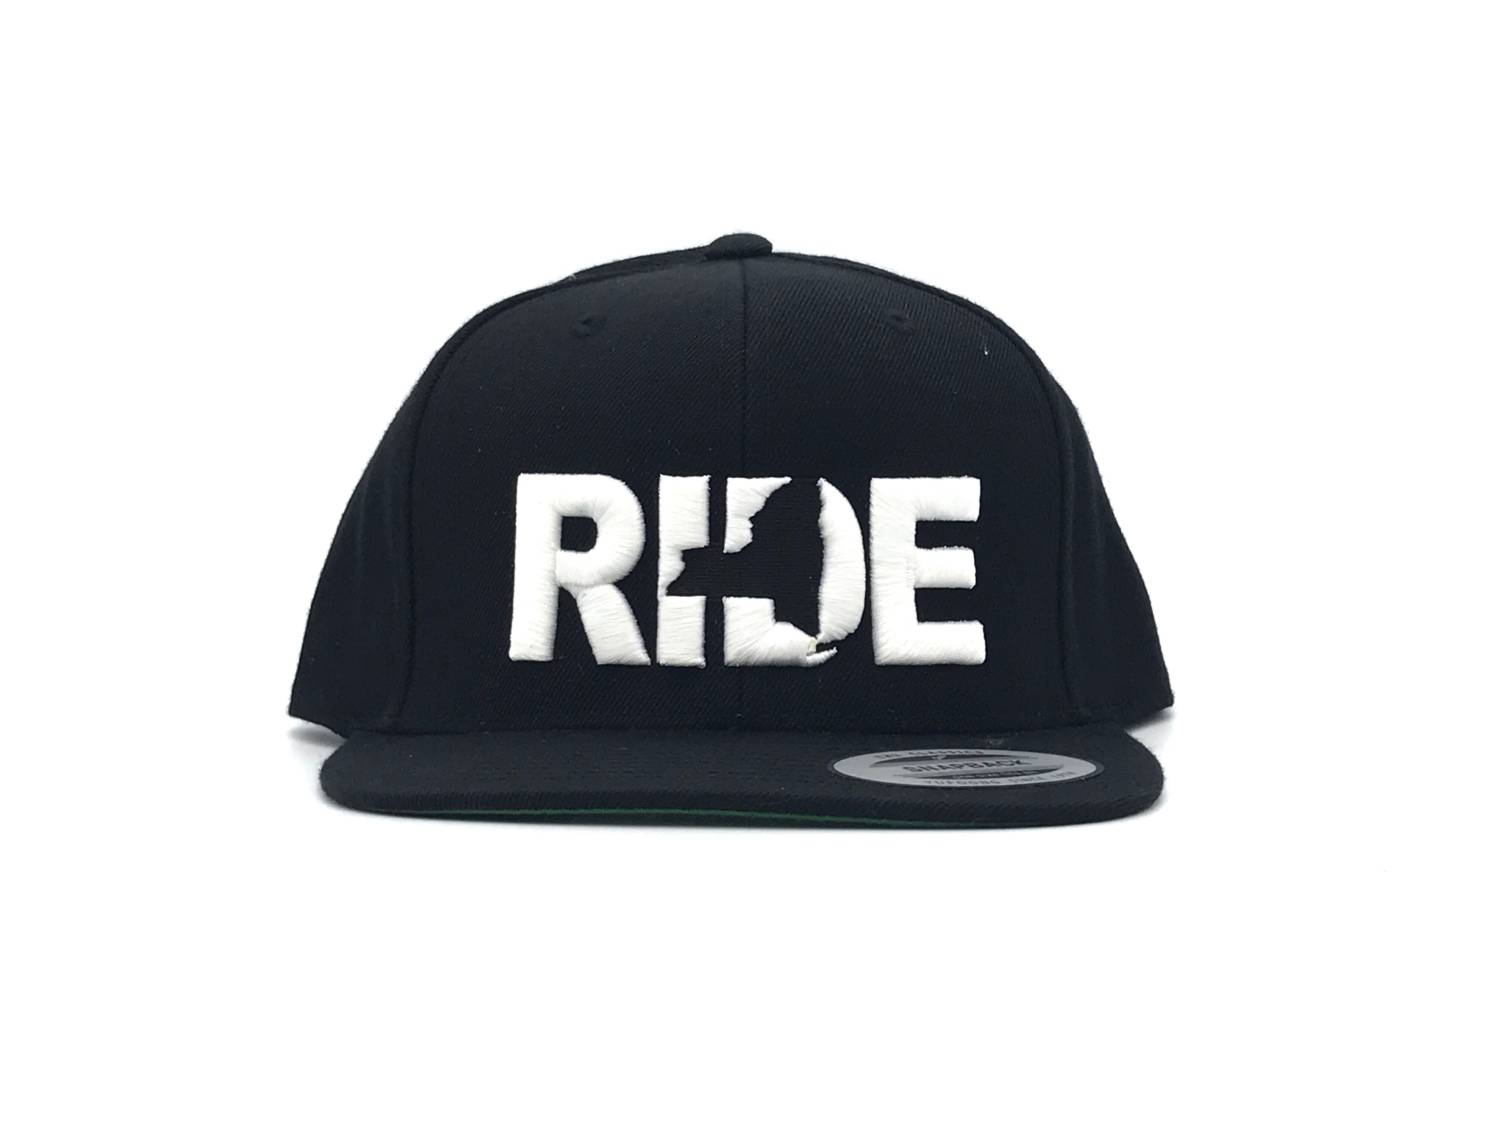 Ride New York Classic Pro 3D Puff Embroidered Snapback Flat Brim Hat Black